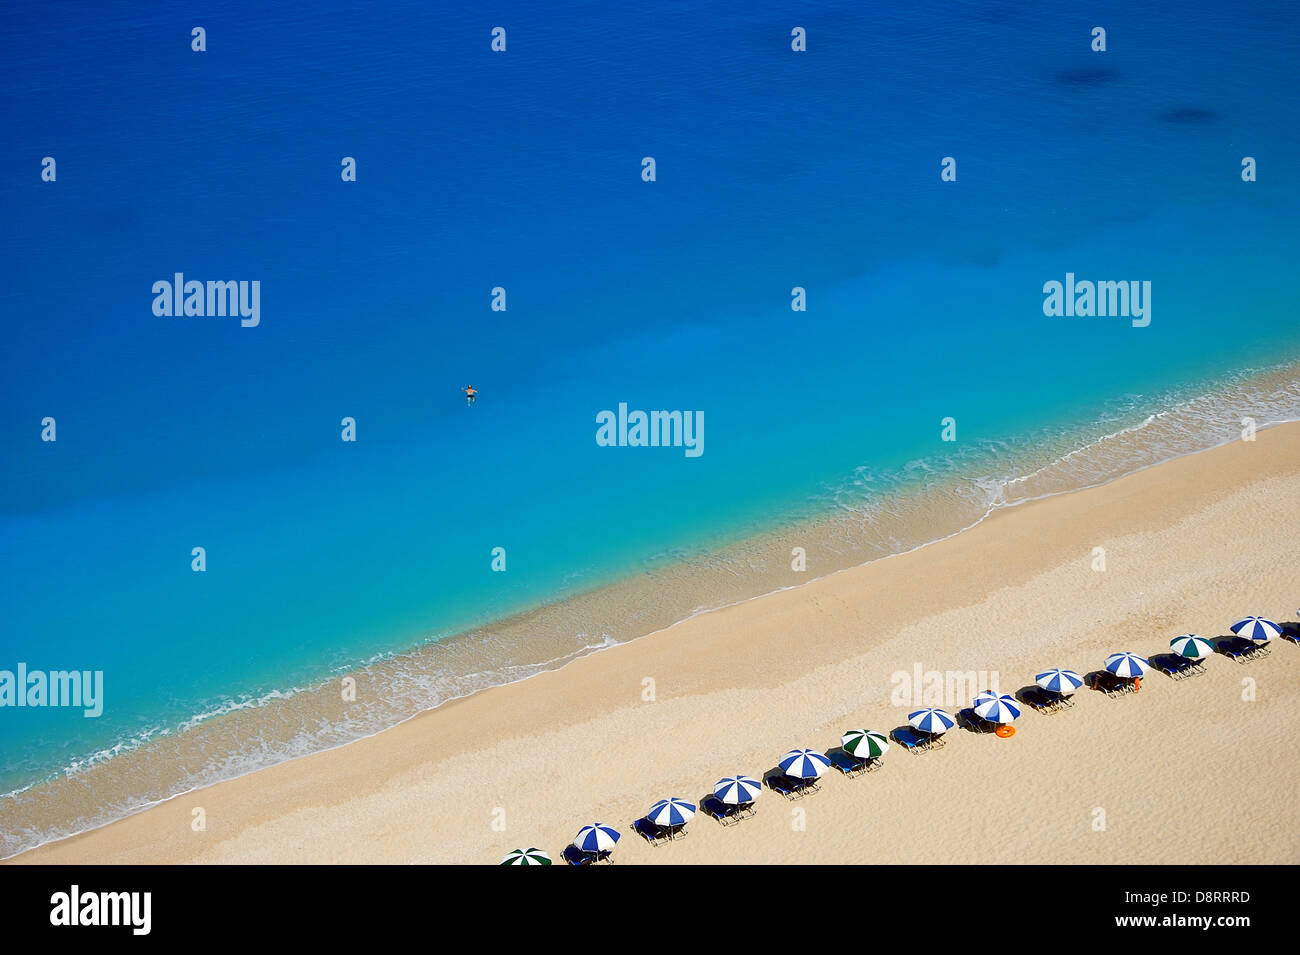 Image of Egremni beach and blue waters of greek island of Lefkada Stock Photo